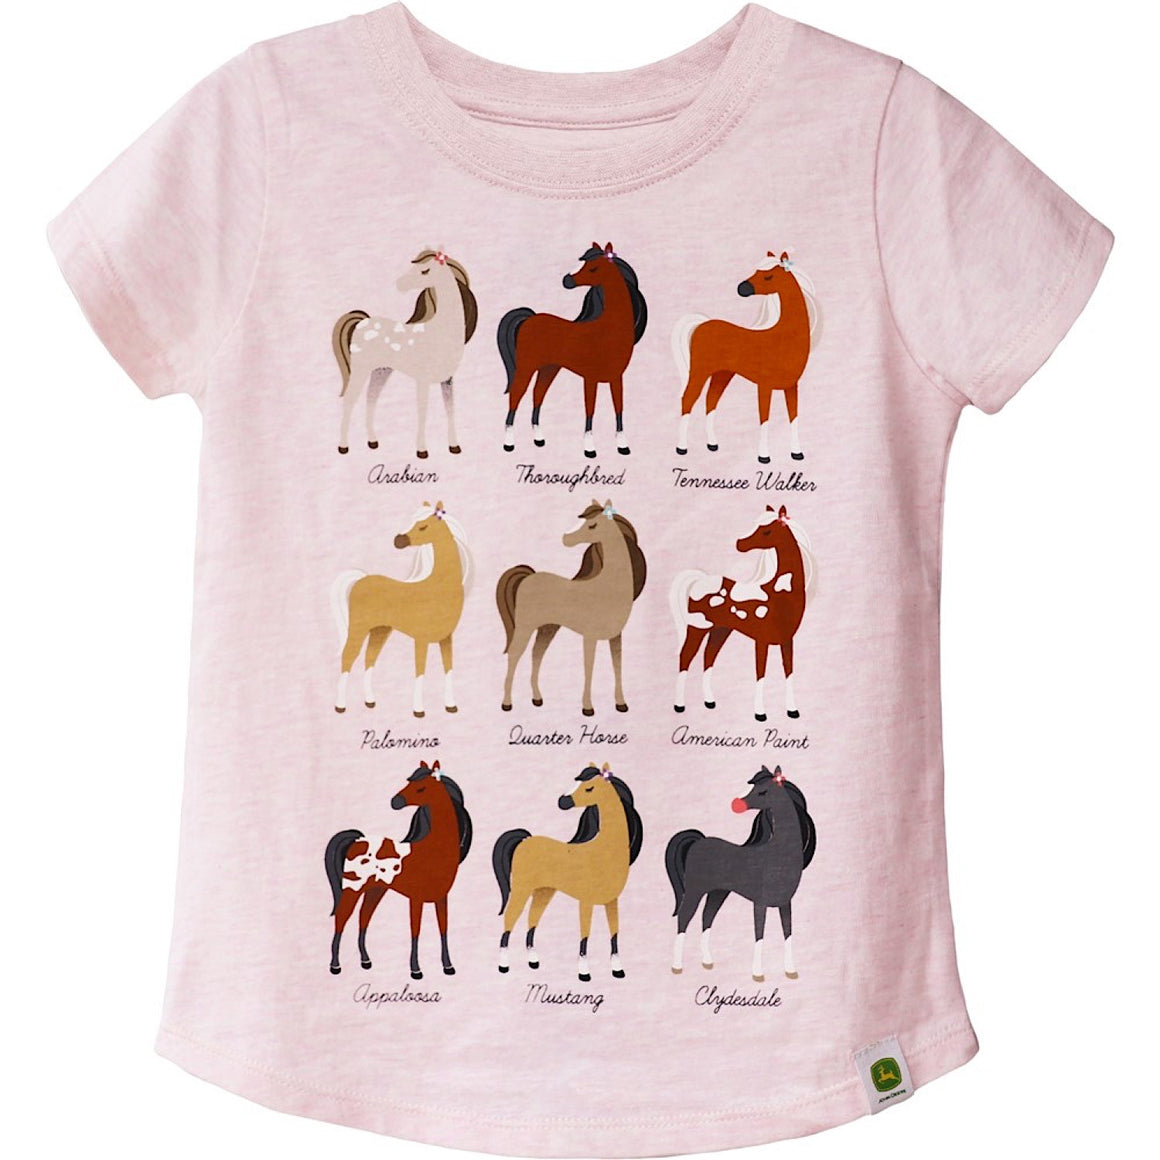 John Deere Toddler Horse Breeds Tee - Pink